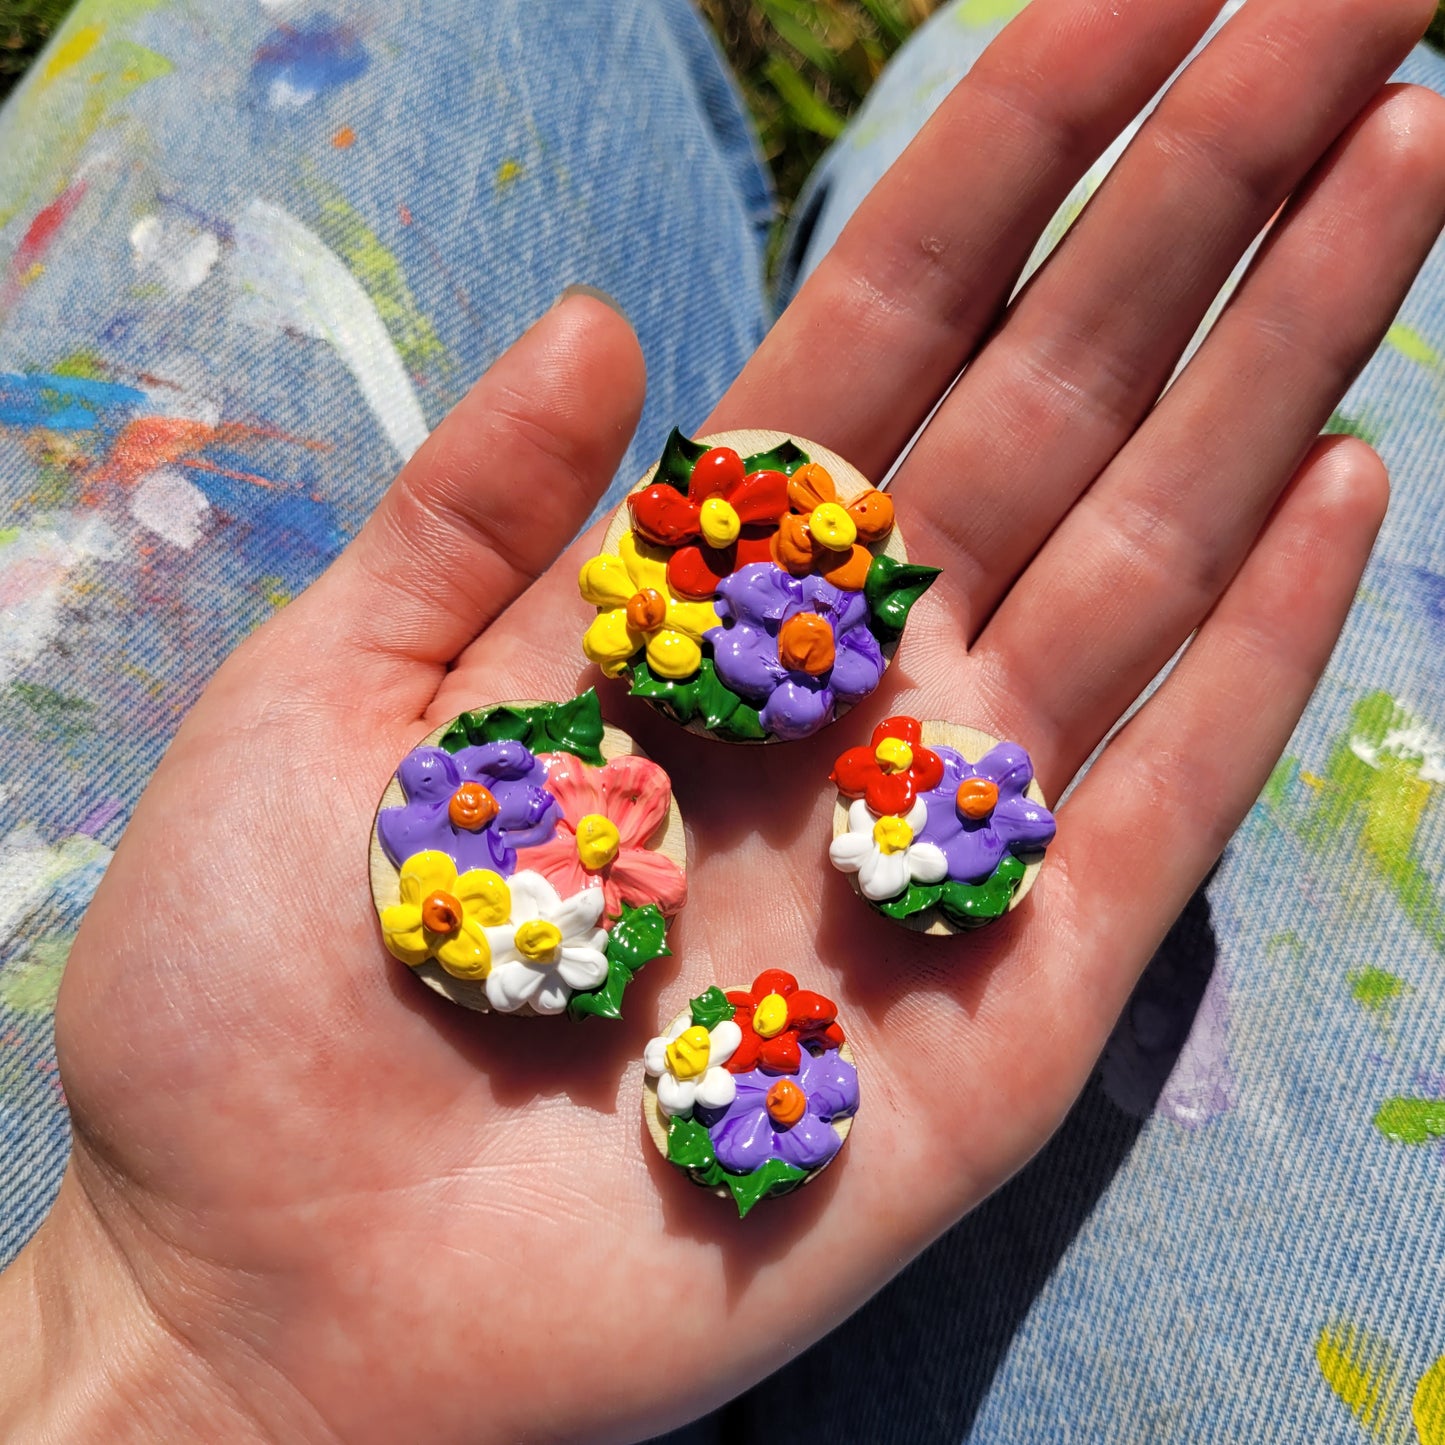 Impasto Flower Magnet Set (4 Pieces)